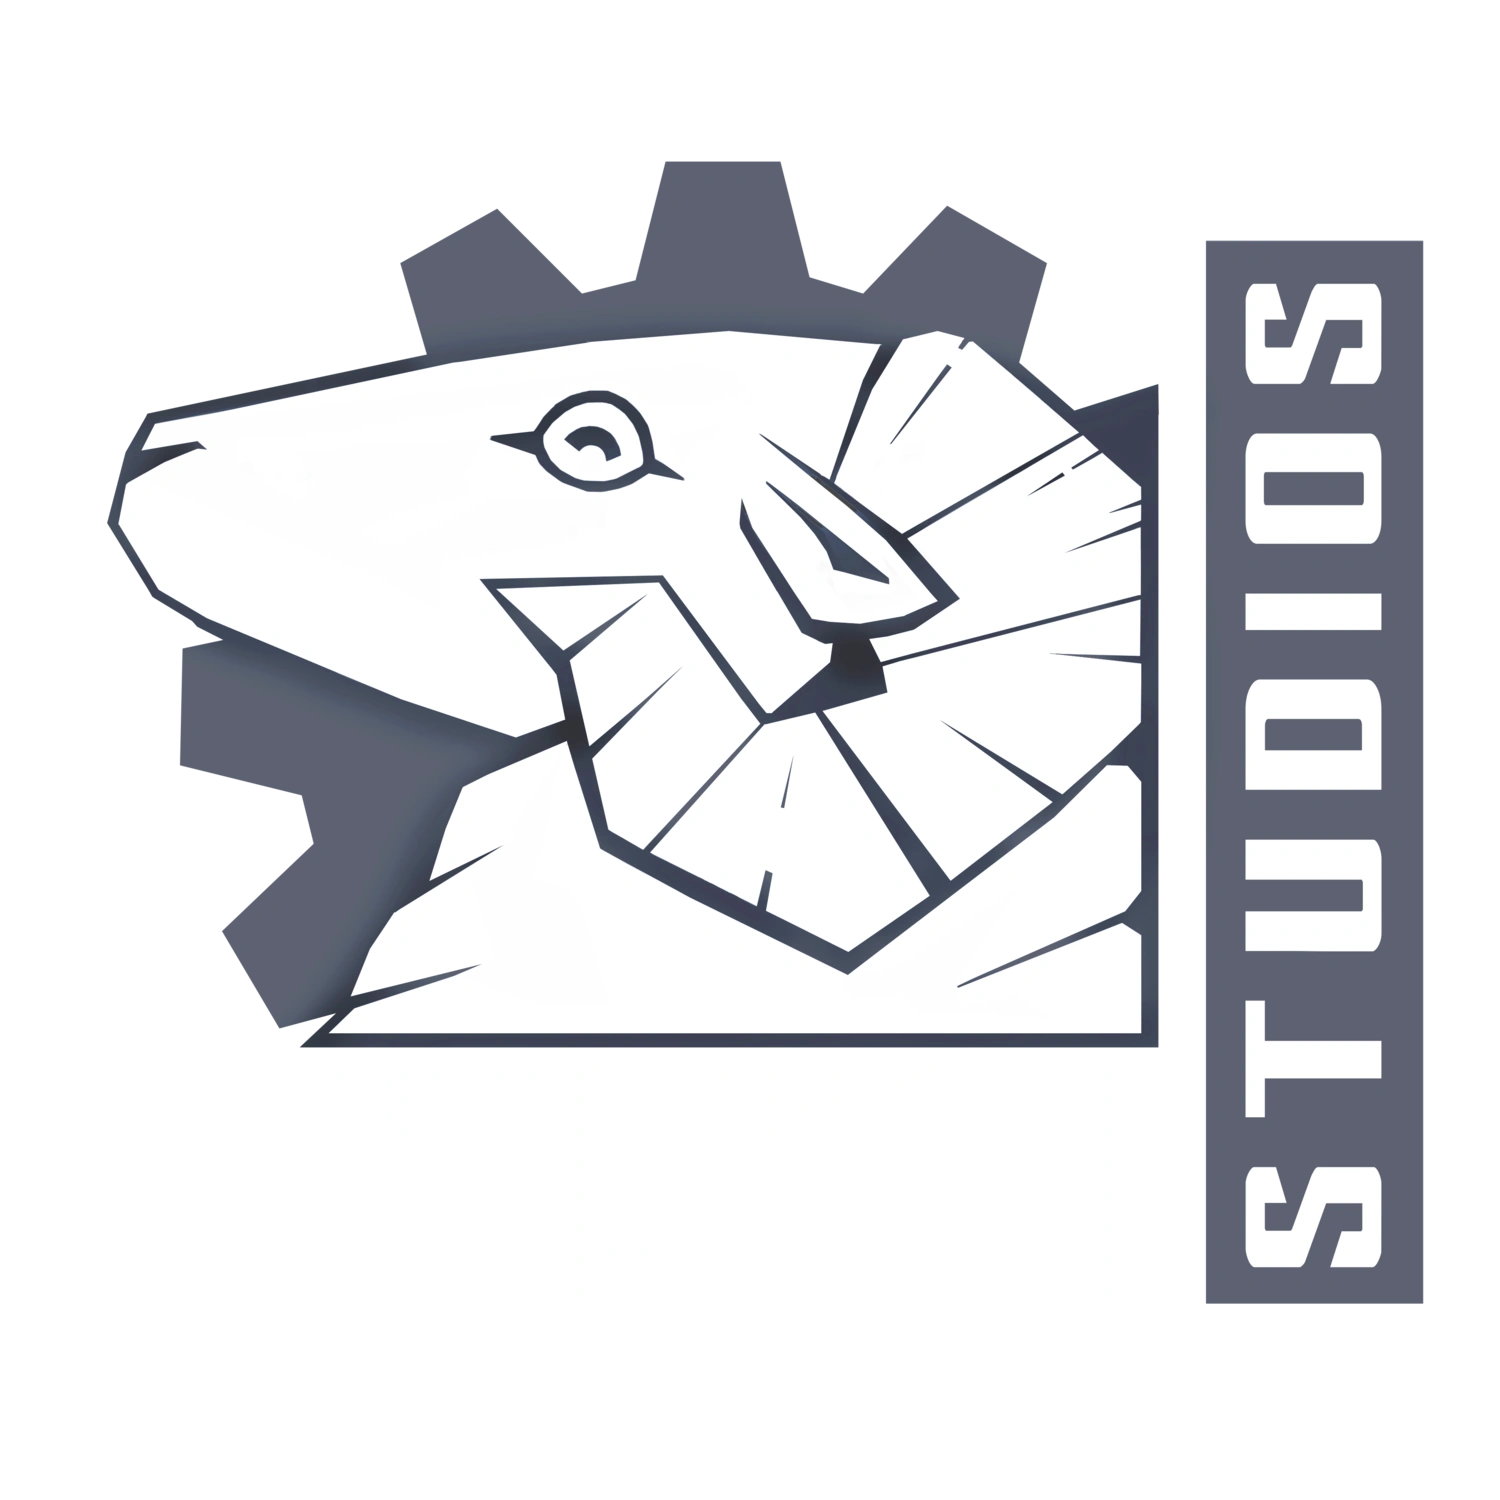 Steel Wool Studios (@SteelWoolStudio) / X